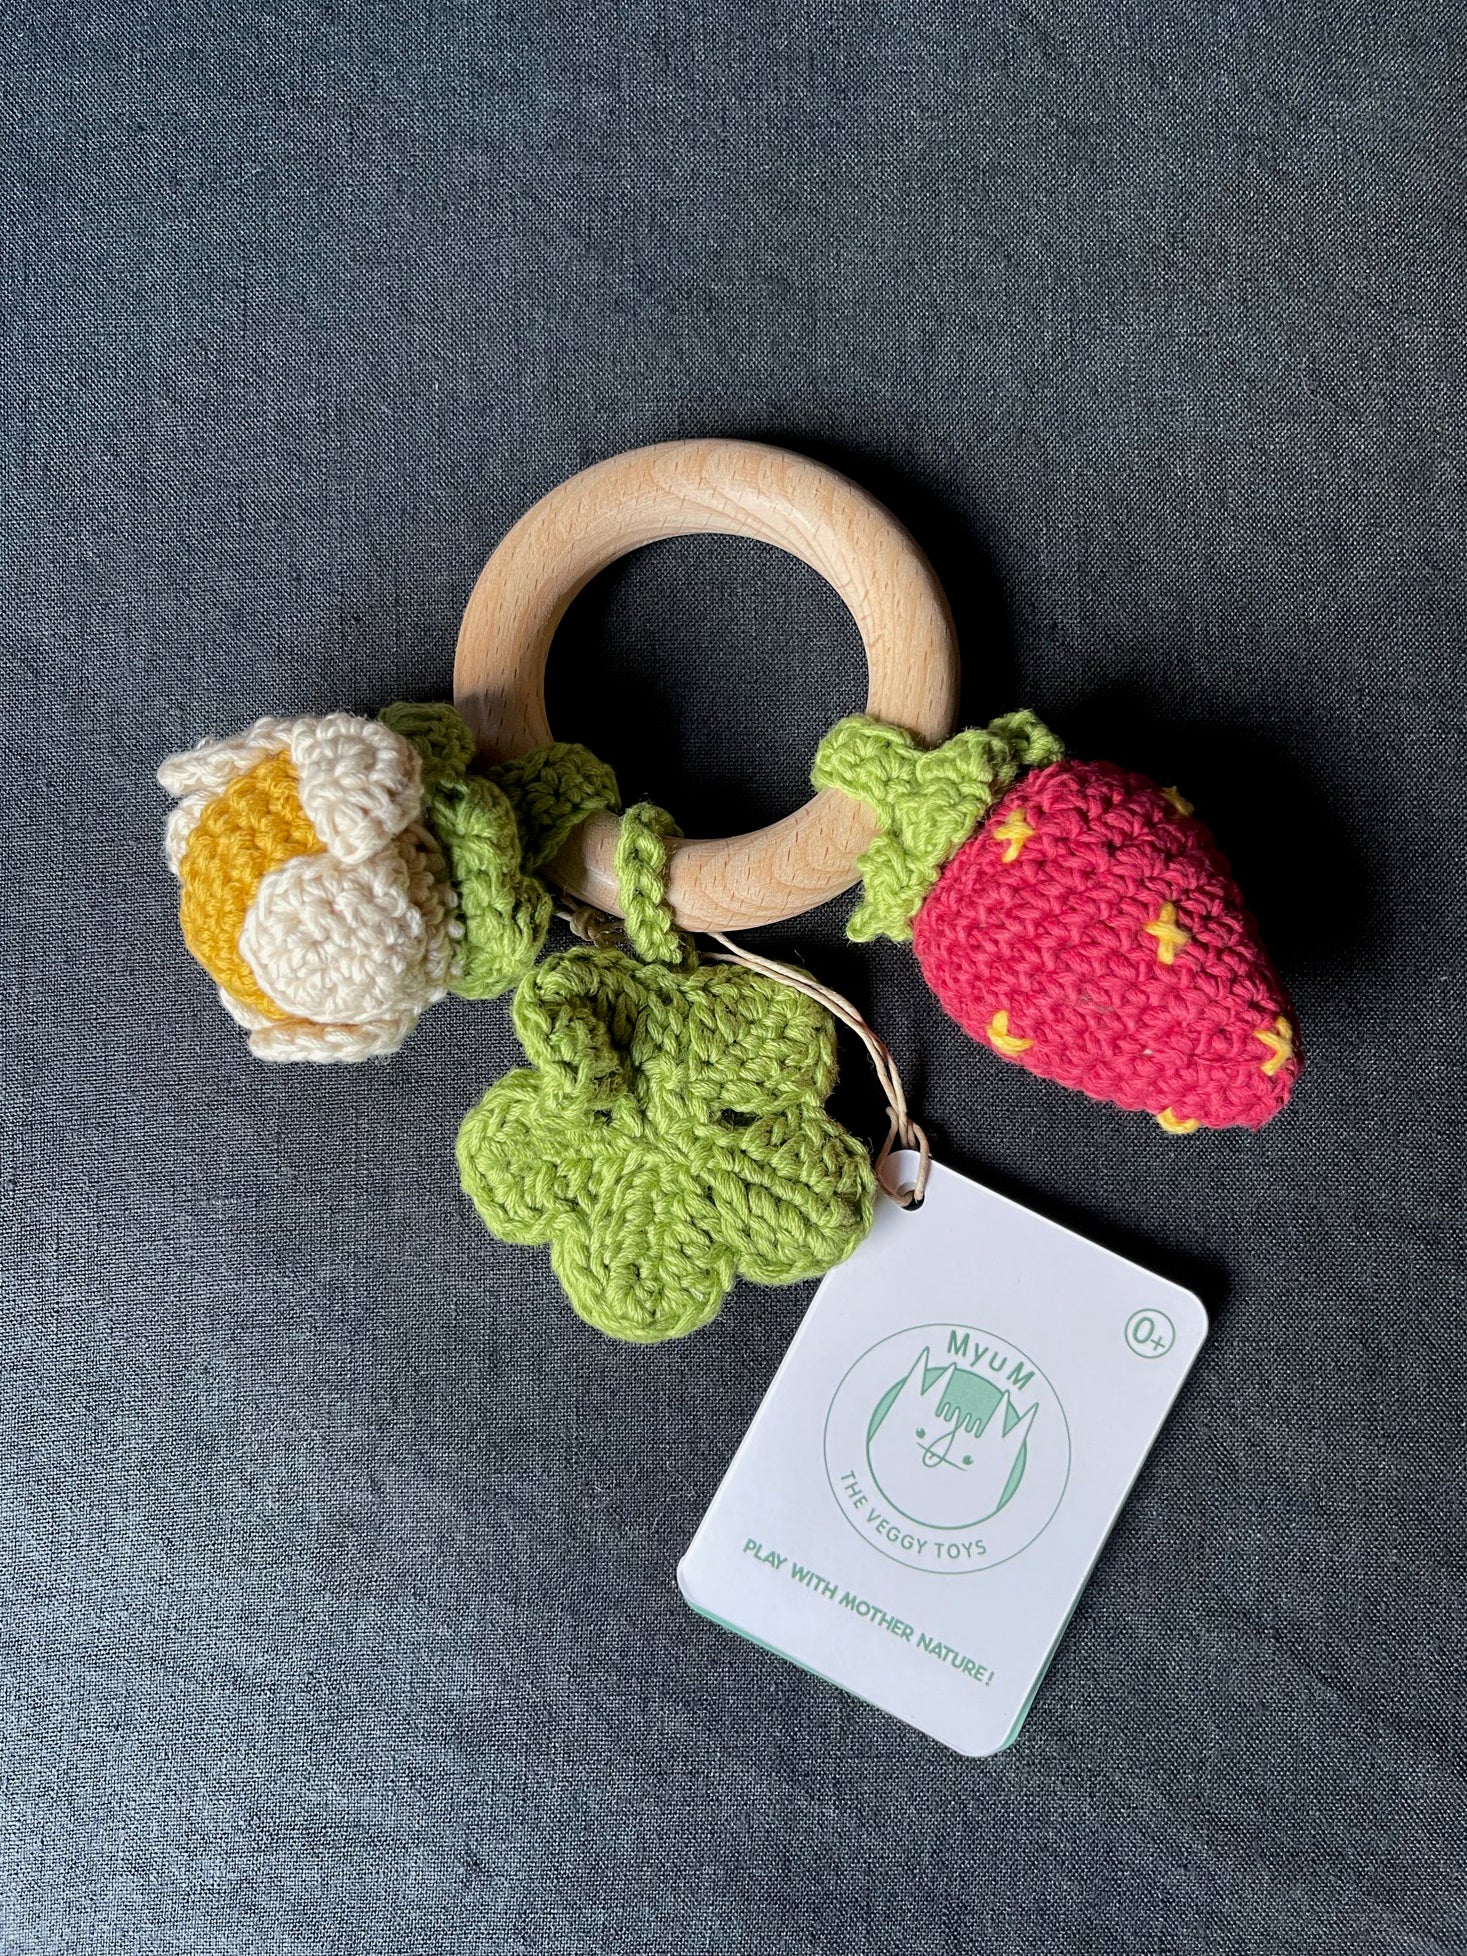 Crochet Strawberry Teether & Rattle